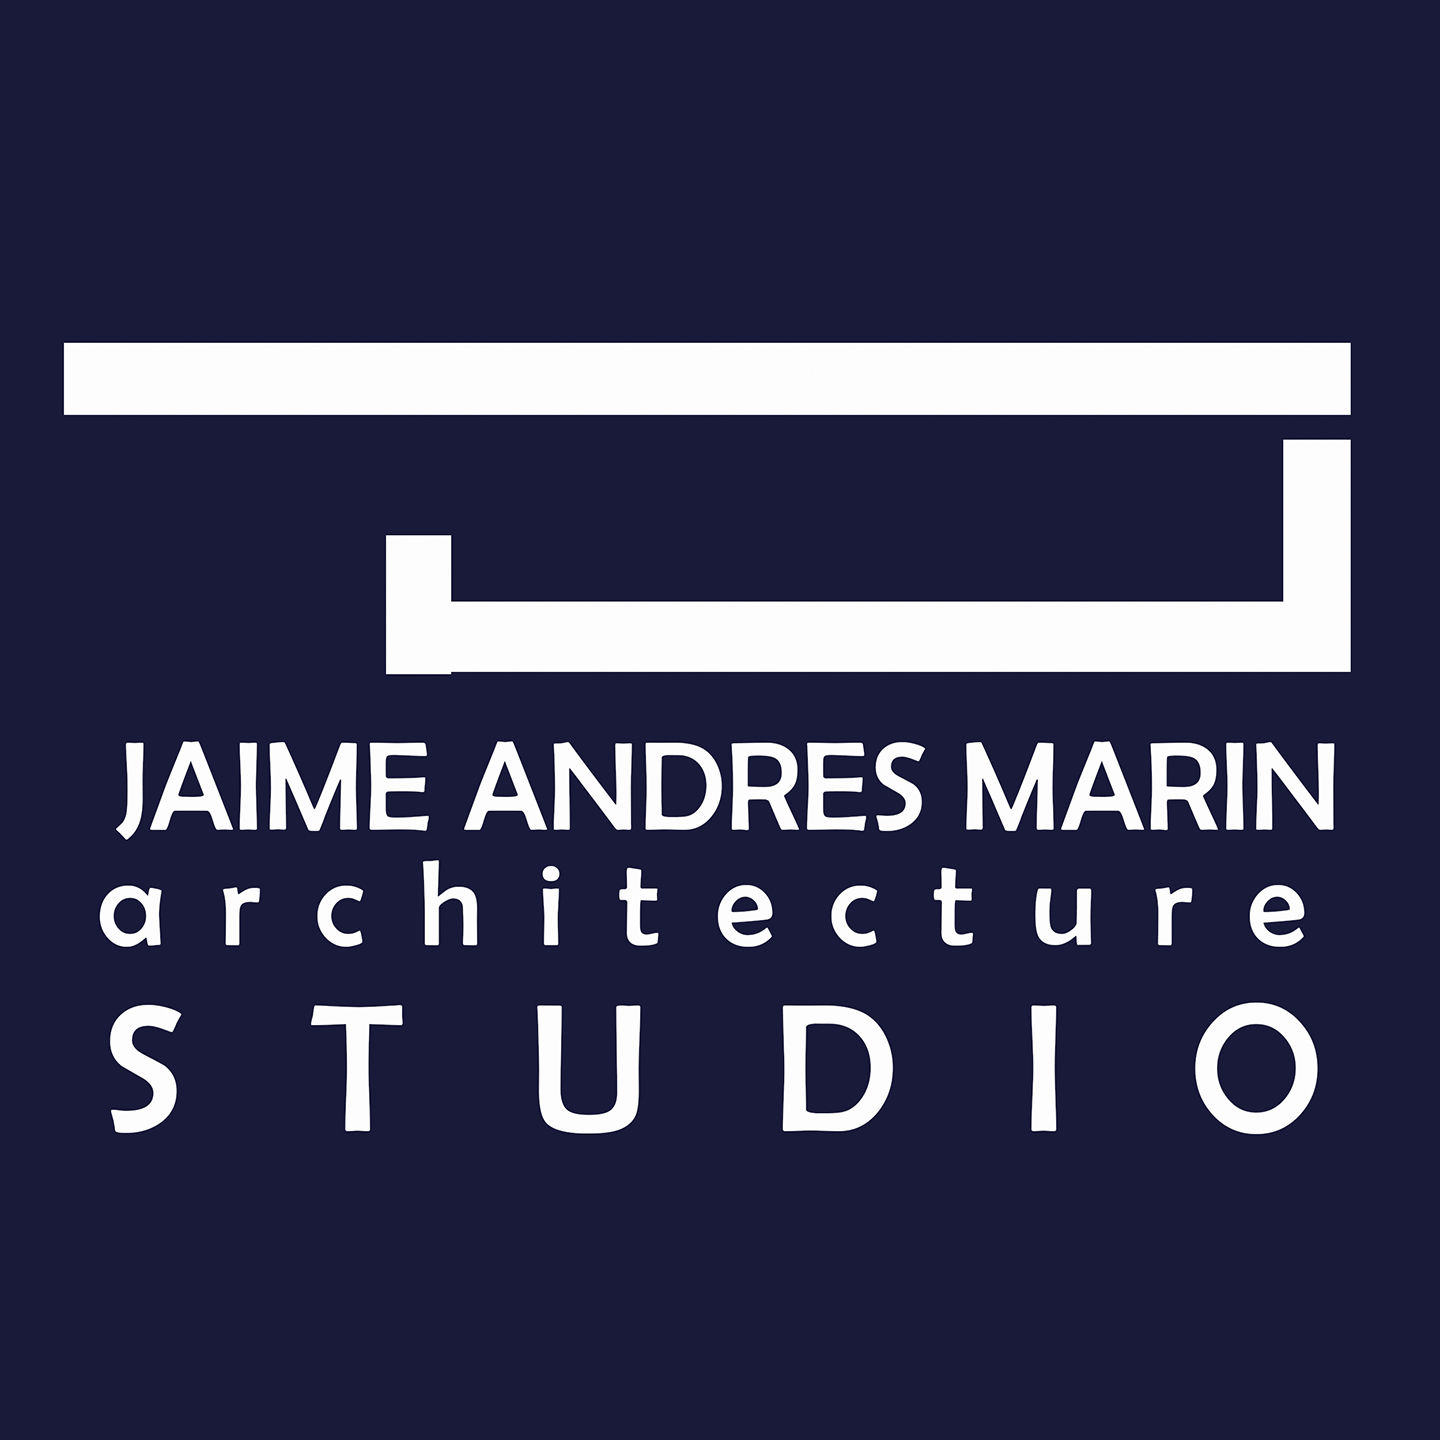 Revista Clave - Especial Arquitectos 2017 - Jaime Andrés Marin